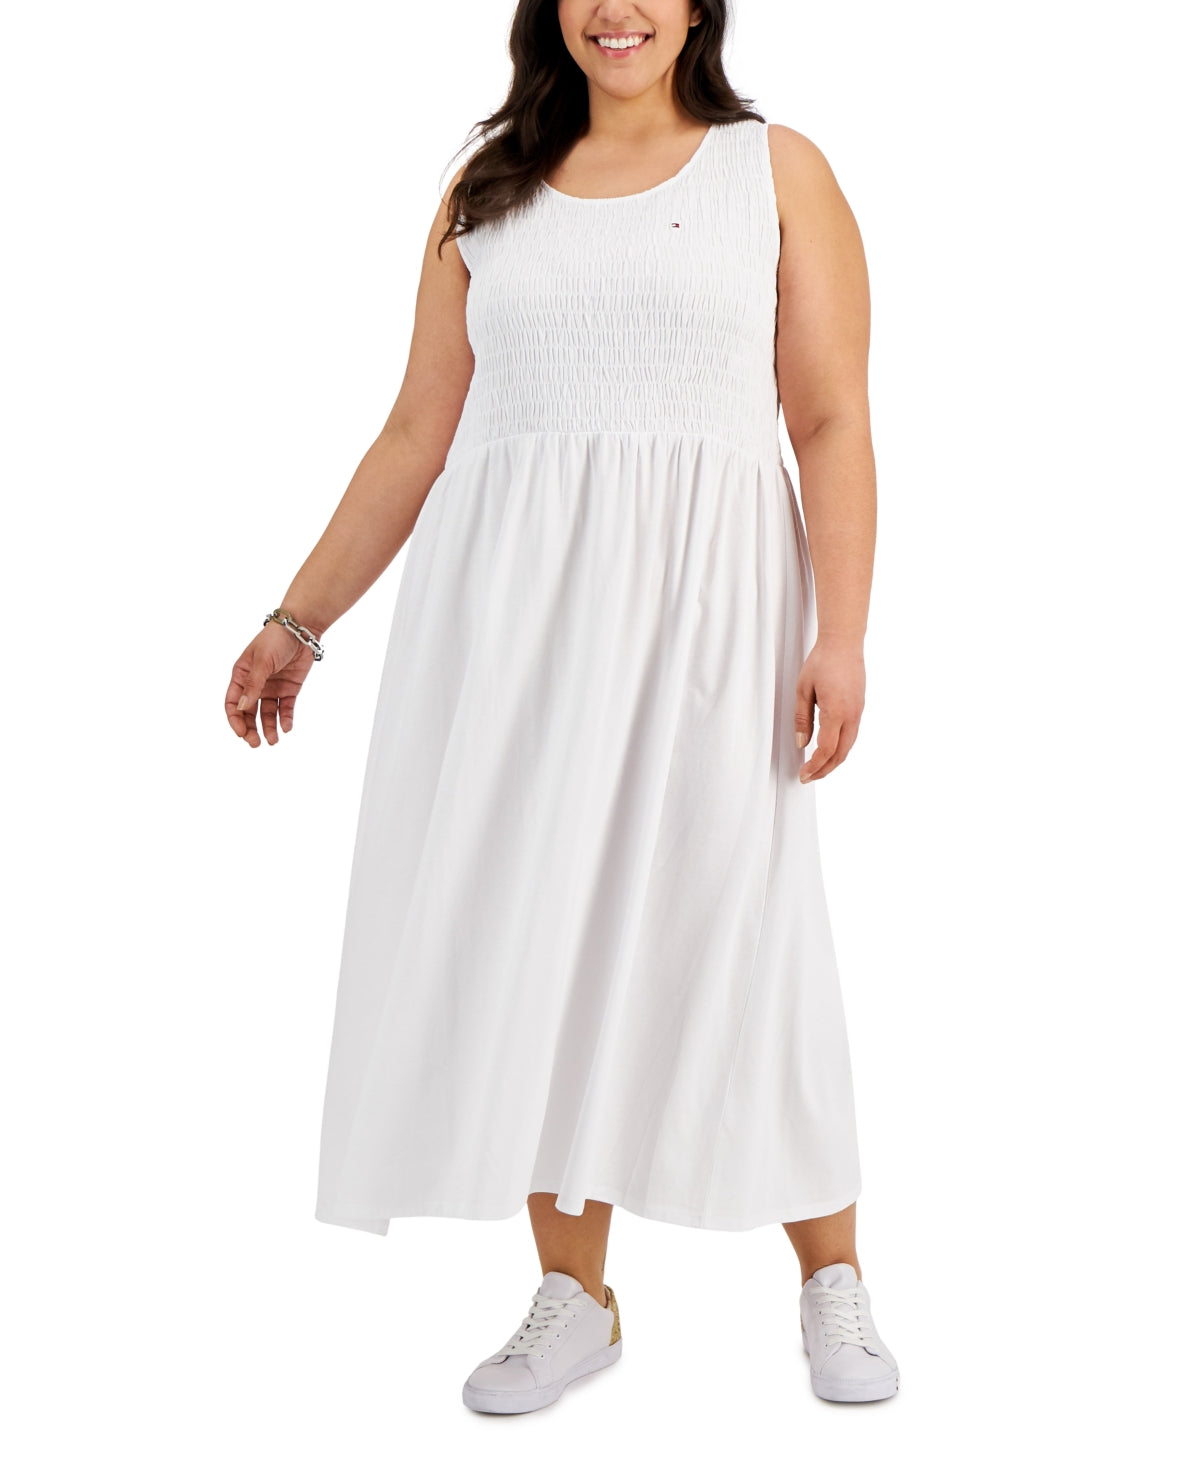 Tommy Hilfiger Women's Smocked Maxi Dress White Size 2X